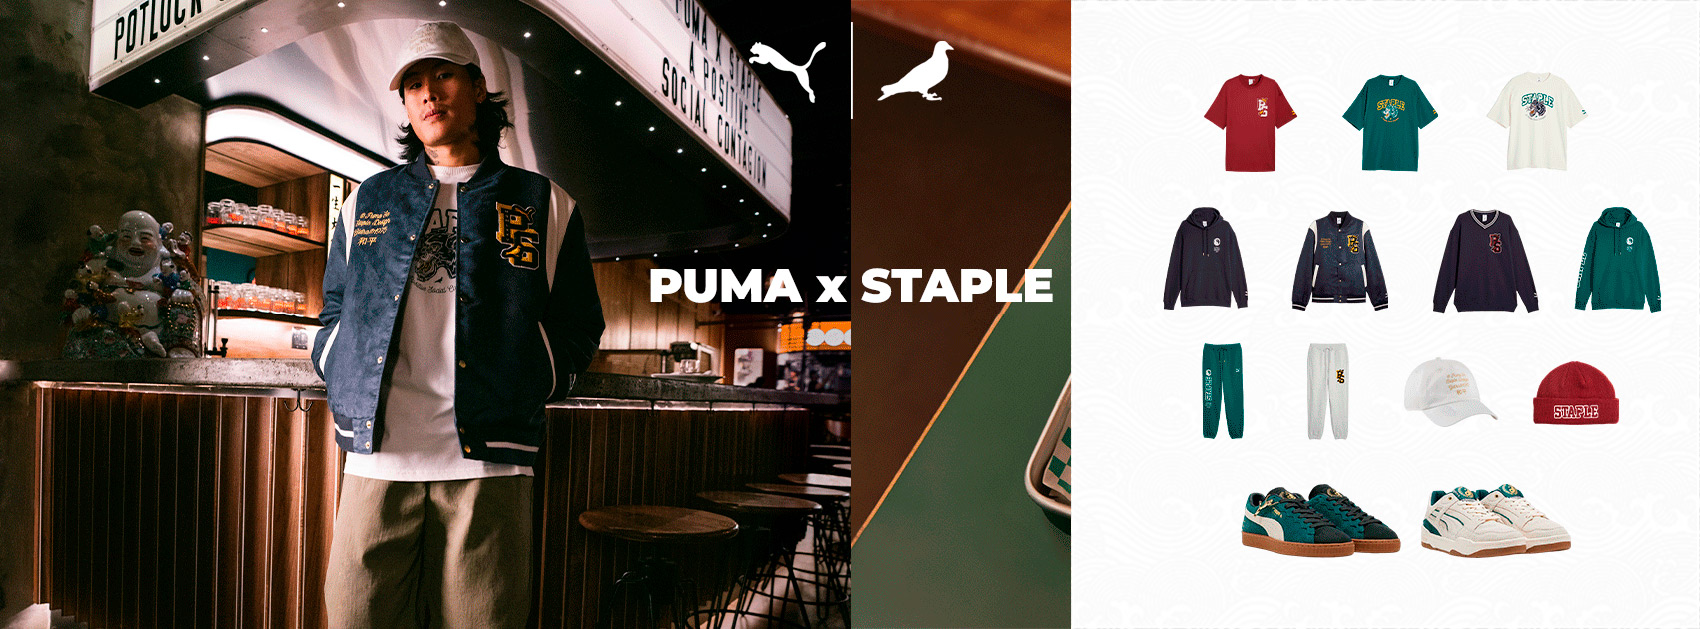 Yeezy v2/ Puma Bapd  Drake wallpapers, Supreme iphone wallpaper, Bape